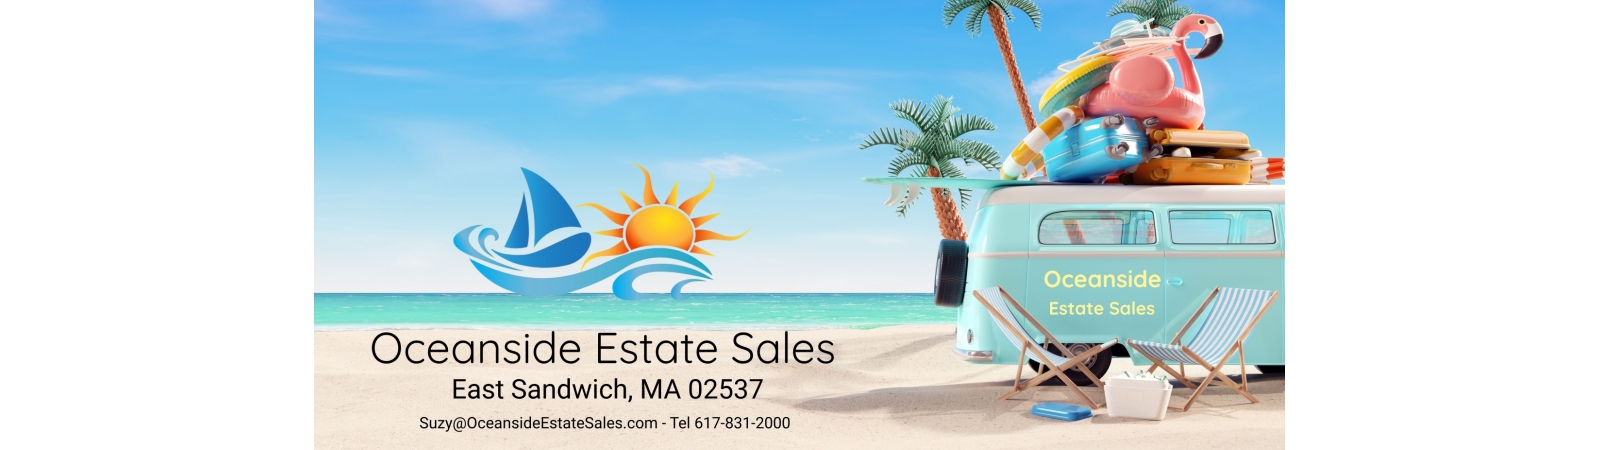 Oceanside Estate Sales | AuctionNinja